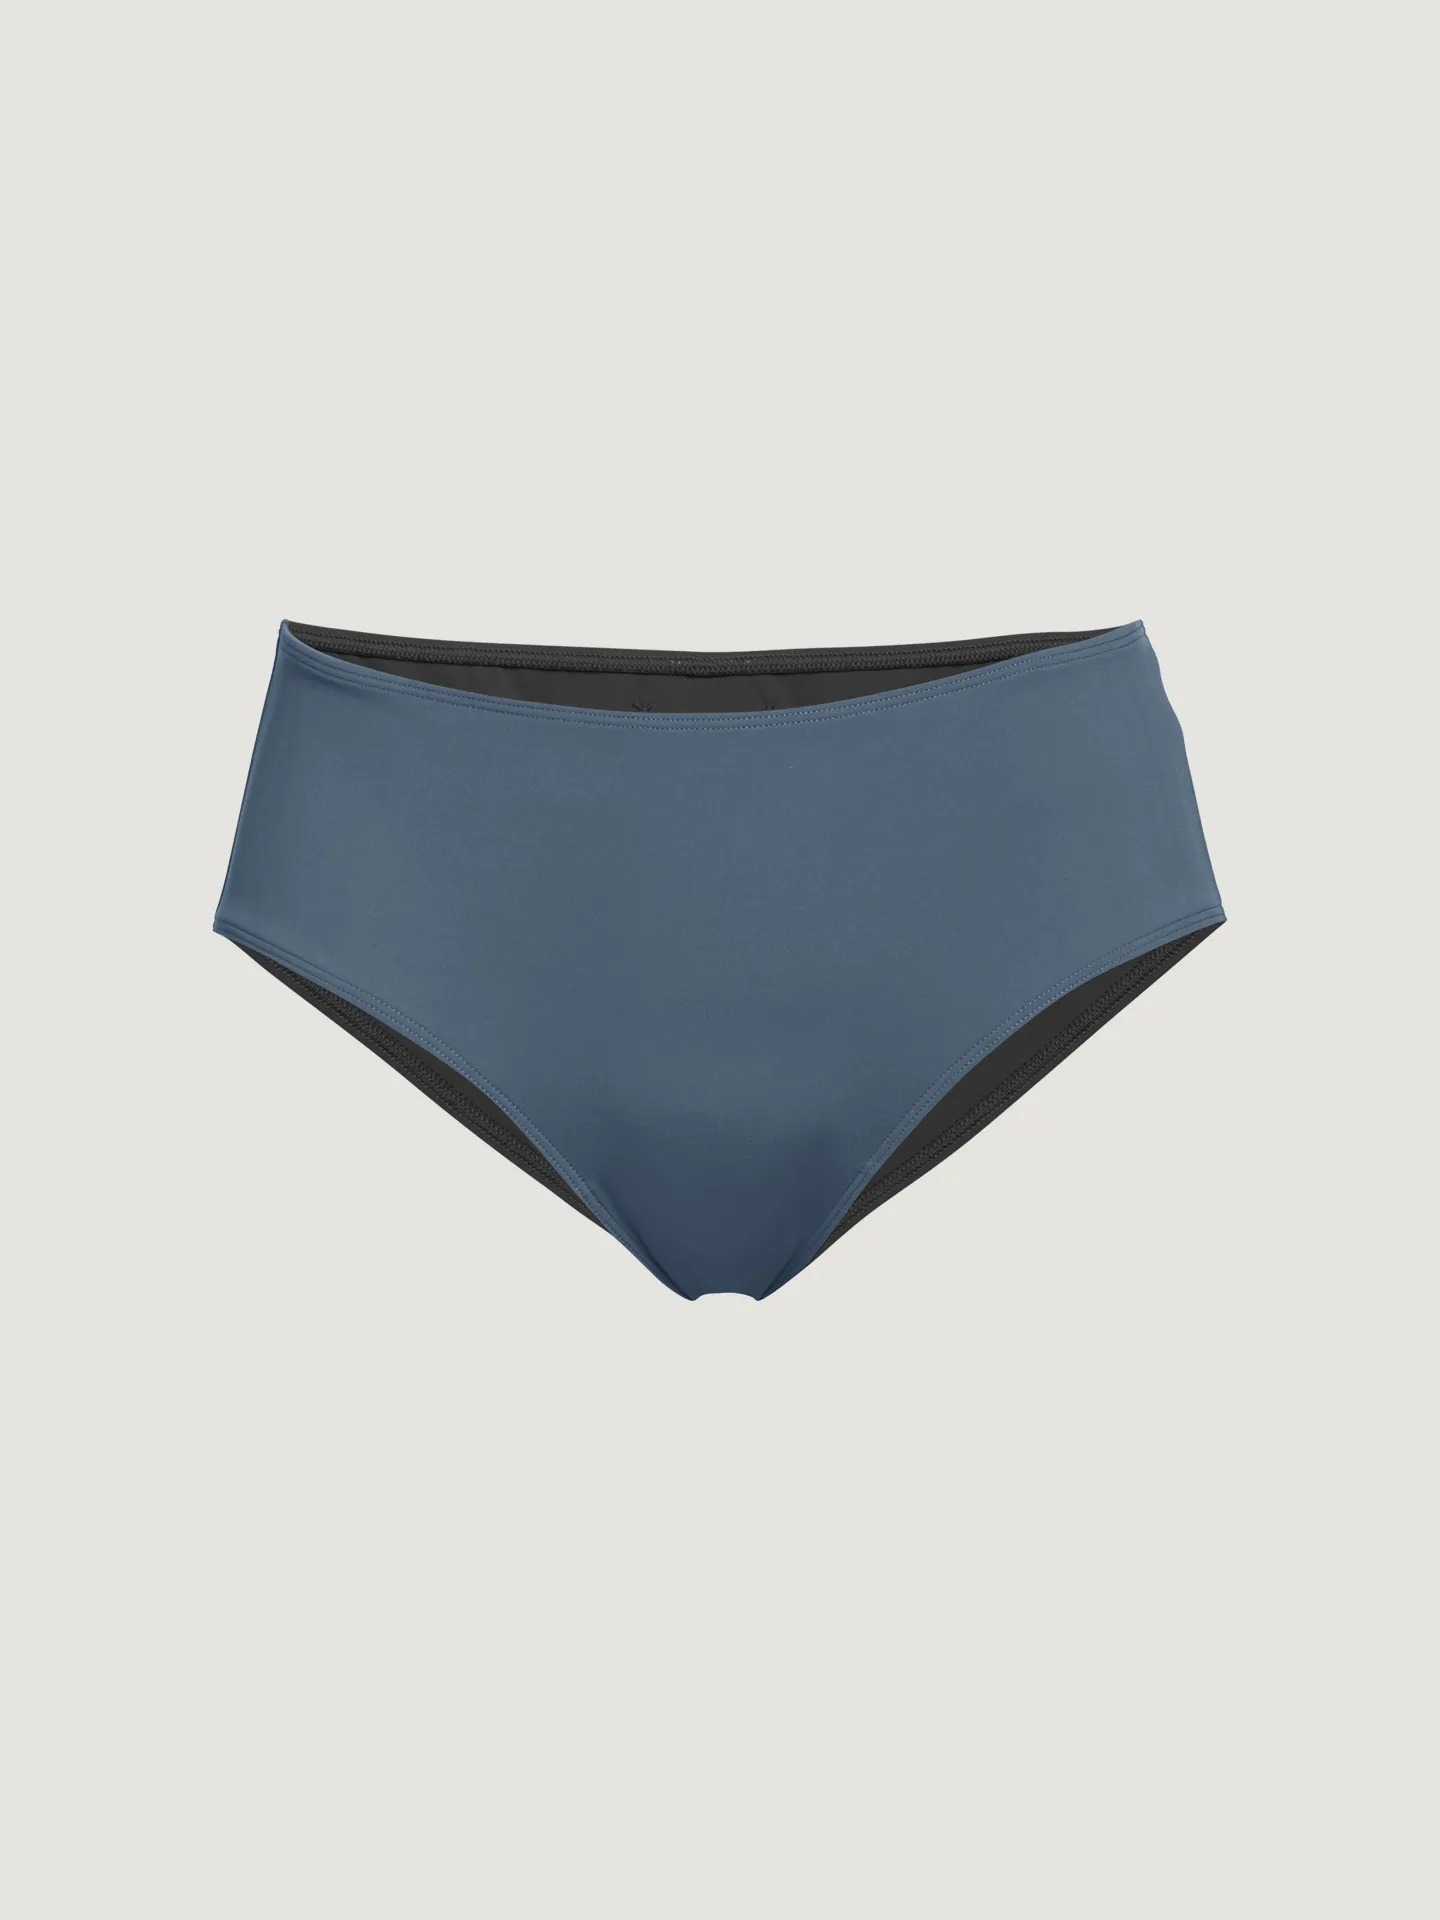 Wolford - Reversible Beach Shorts, Donna, pacific blue/black, Taglia: M